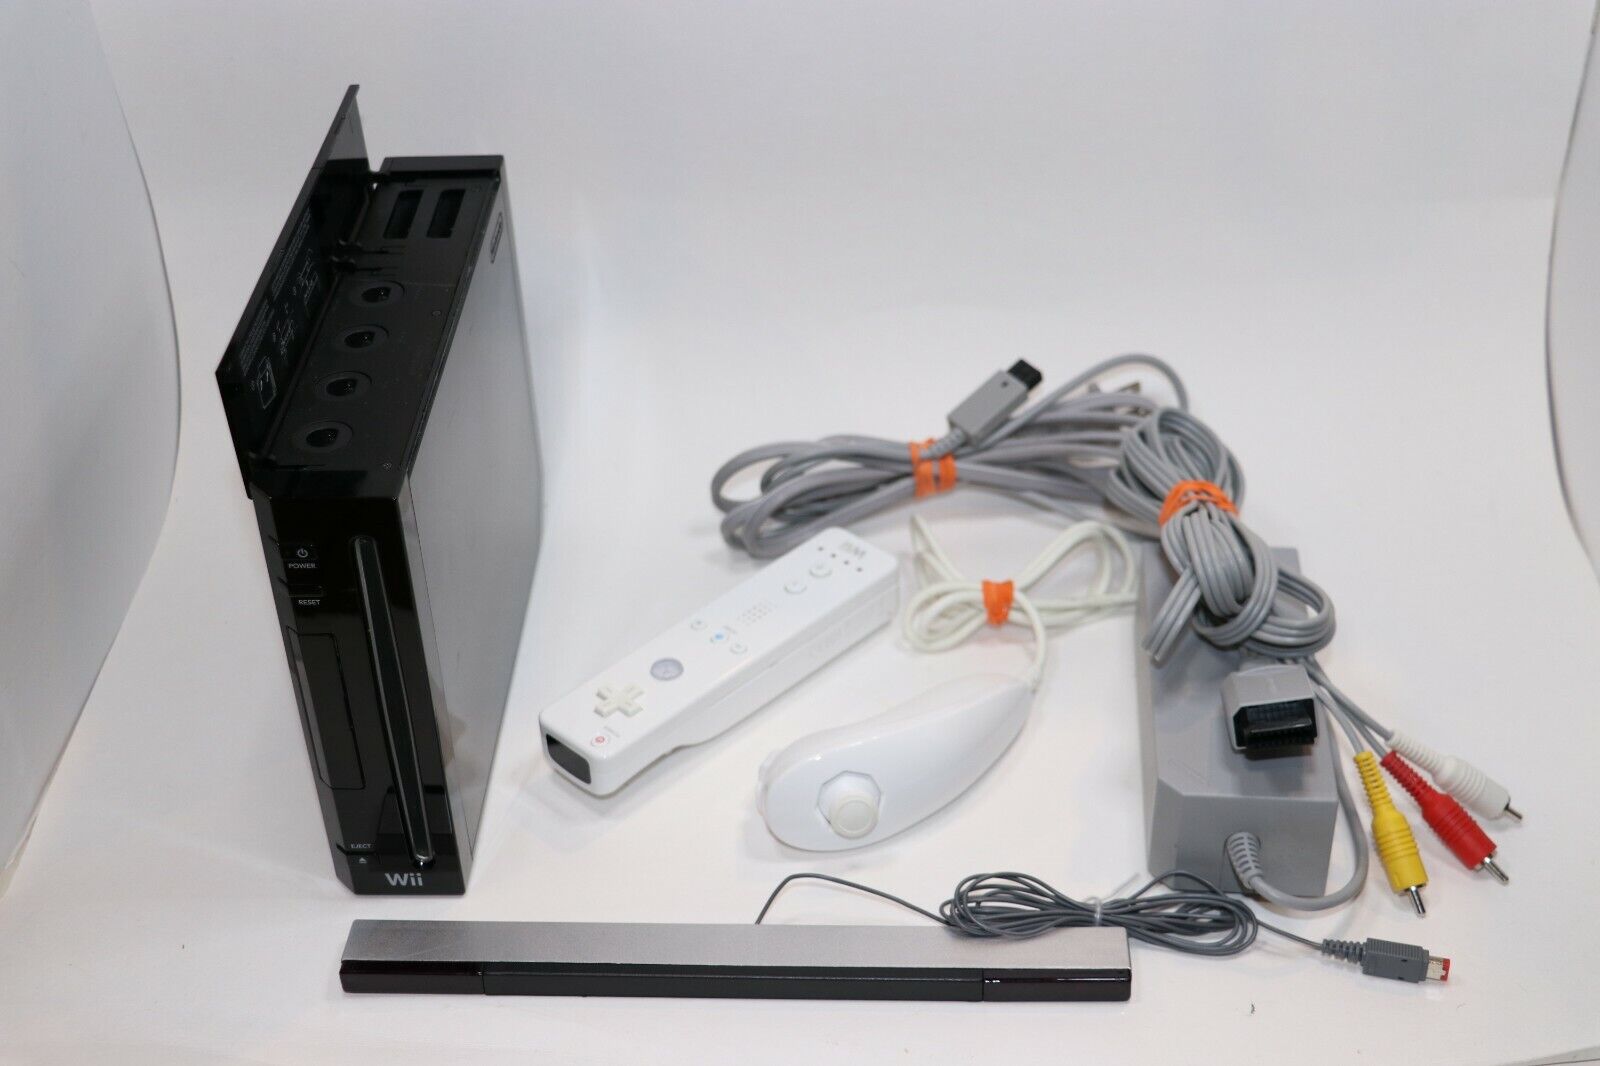 Nintendo Wii Console RVL-001 Bundle W/ 4 Controllers 2 Nunchucks Charging Base